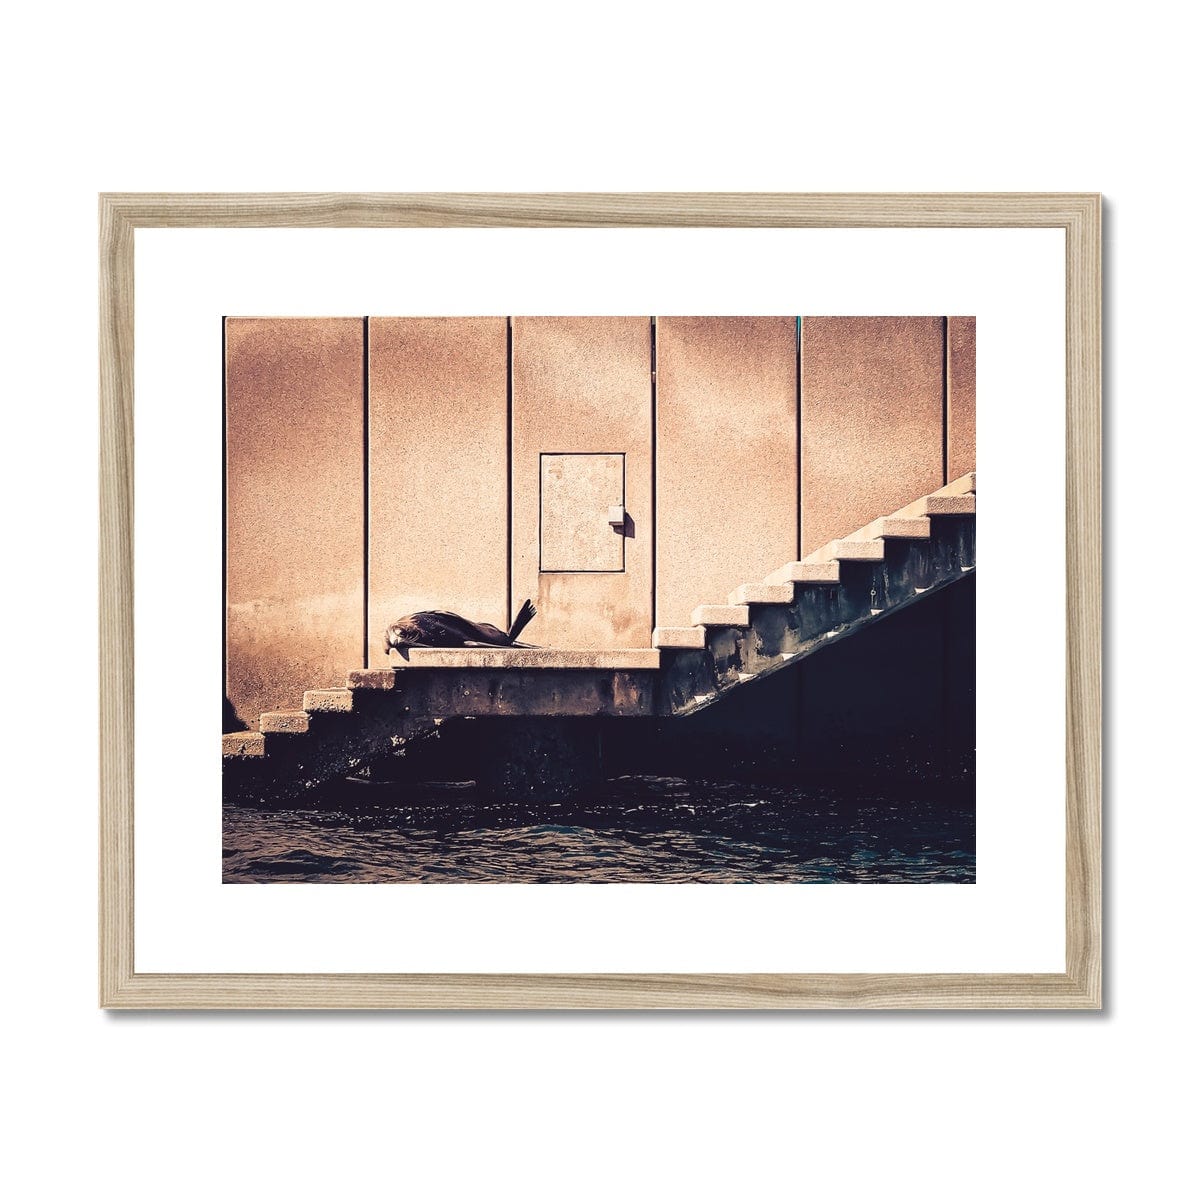 Adam Davies Framed A4 Landscape (29x21cm) / Natural Frame Benny The Seal On The Opera House Steps Framed & Mounted Print